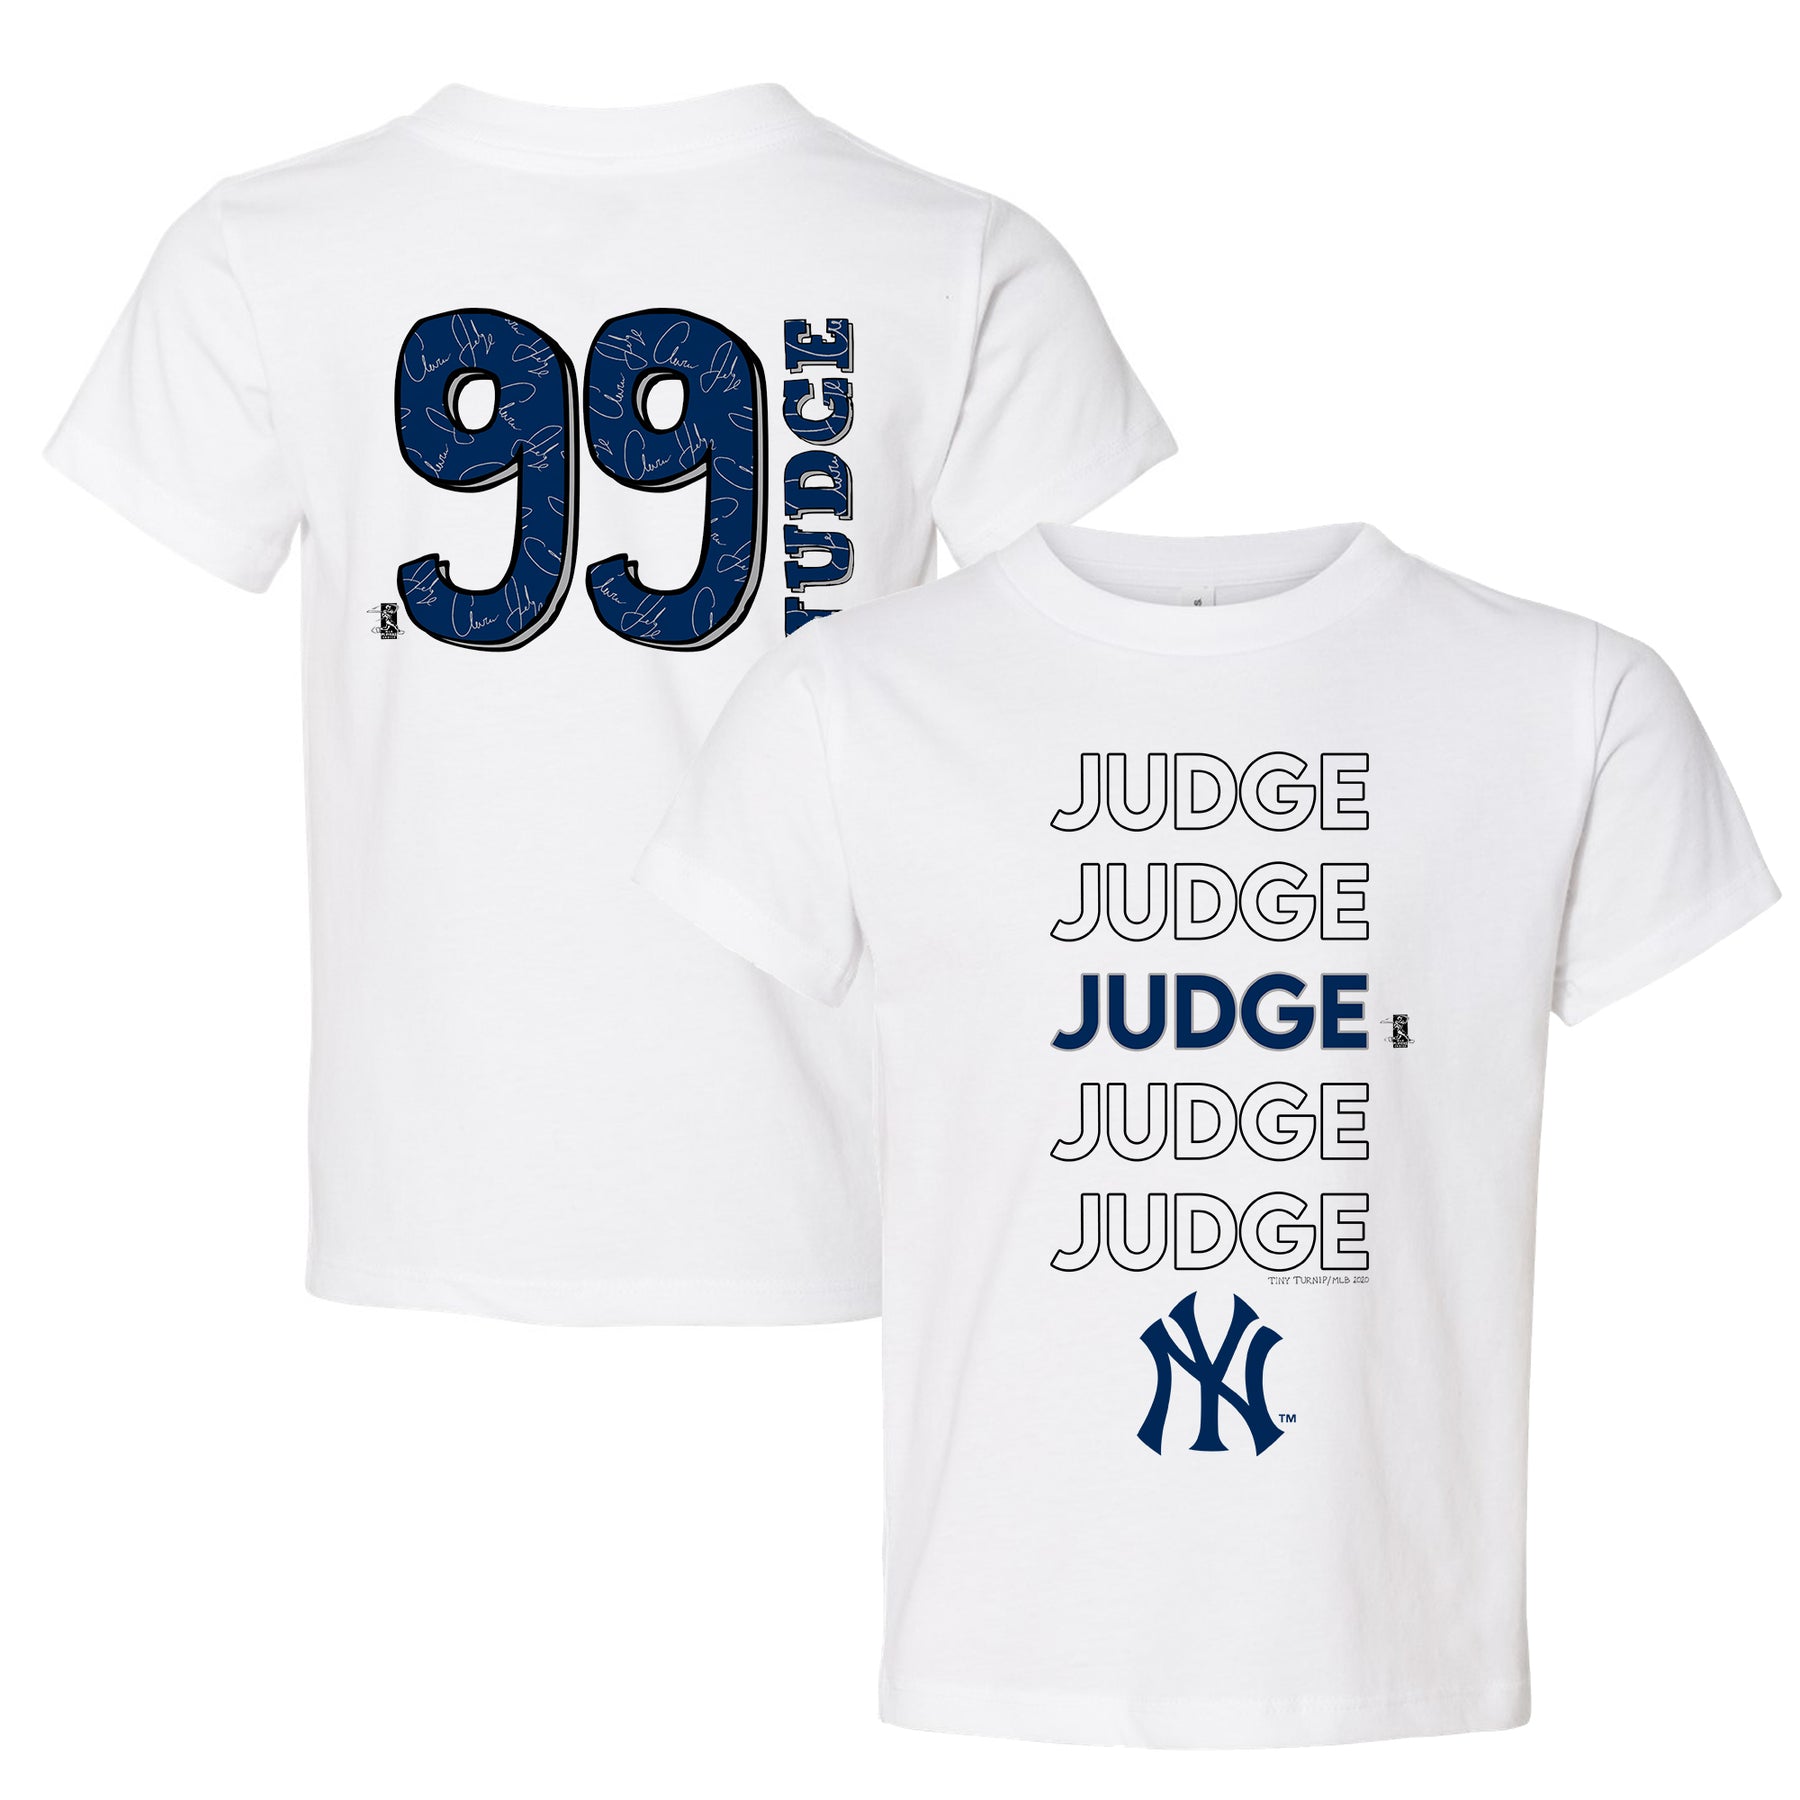 Aaron Judge YOUTH New York Yankees Jersey